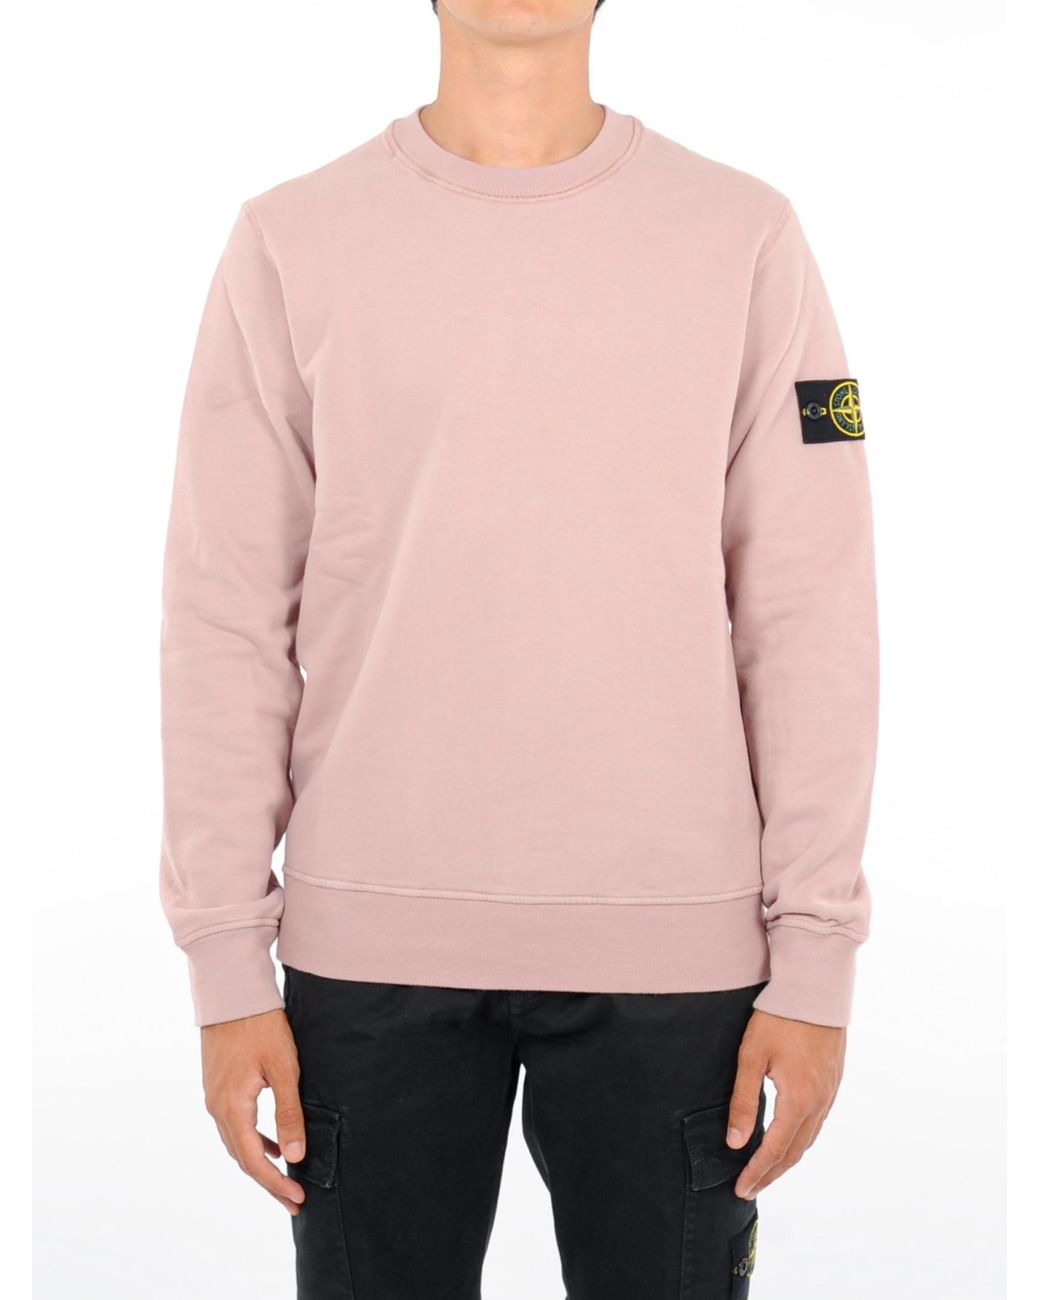 Stone Island Sweat Shirt Sweatshirt in Pink for Men | Lyst UK